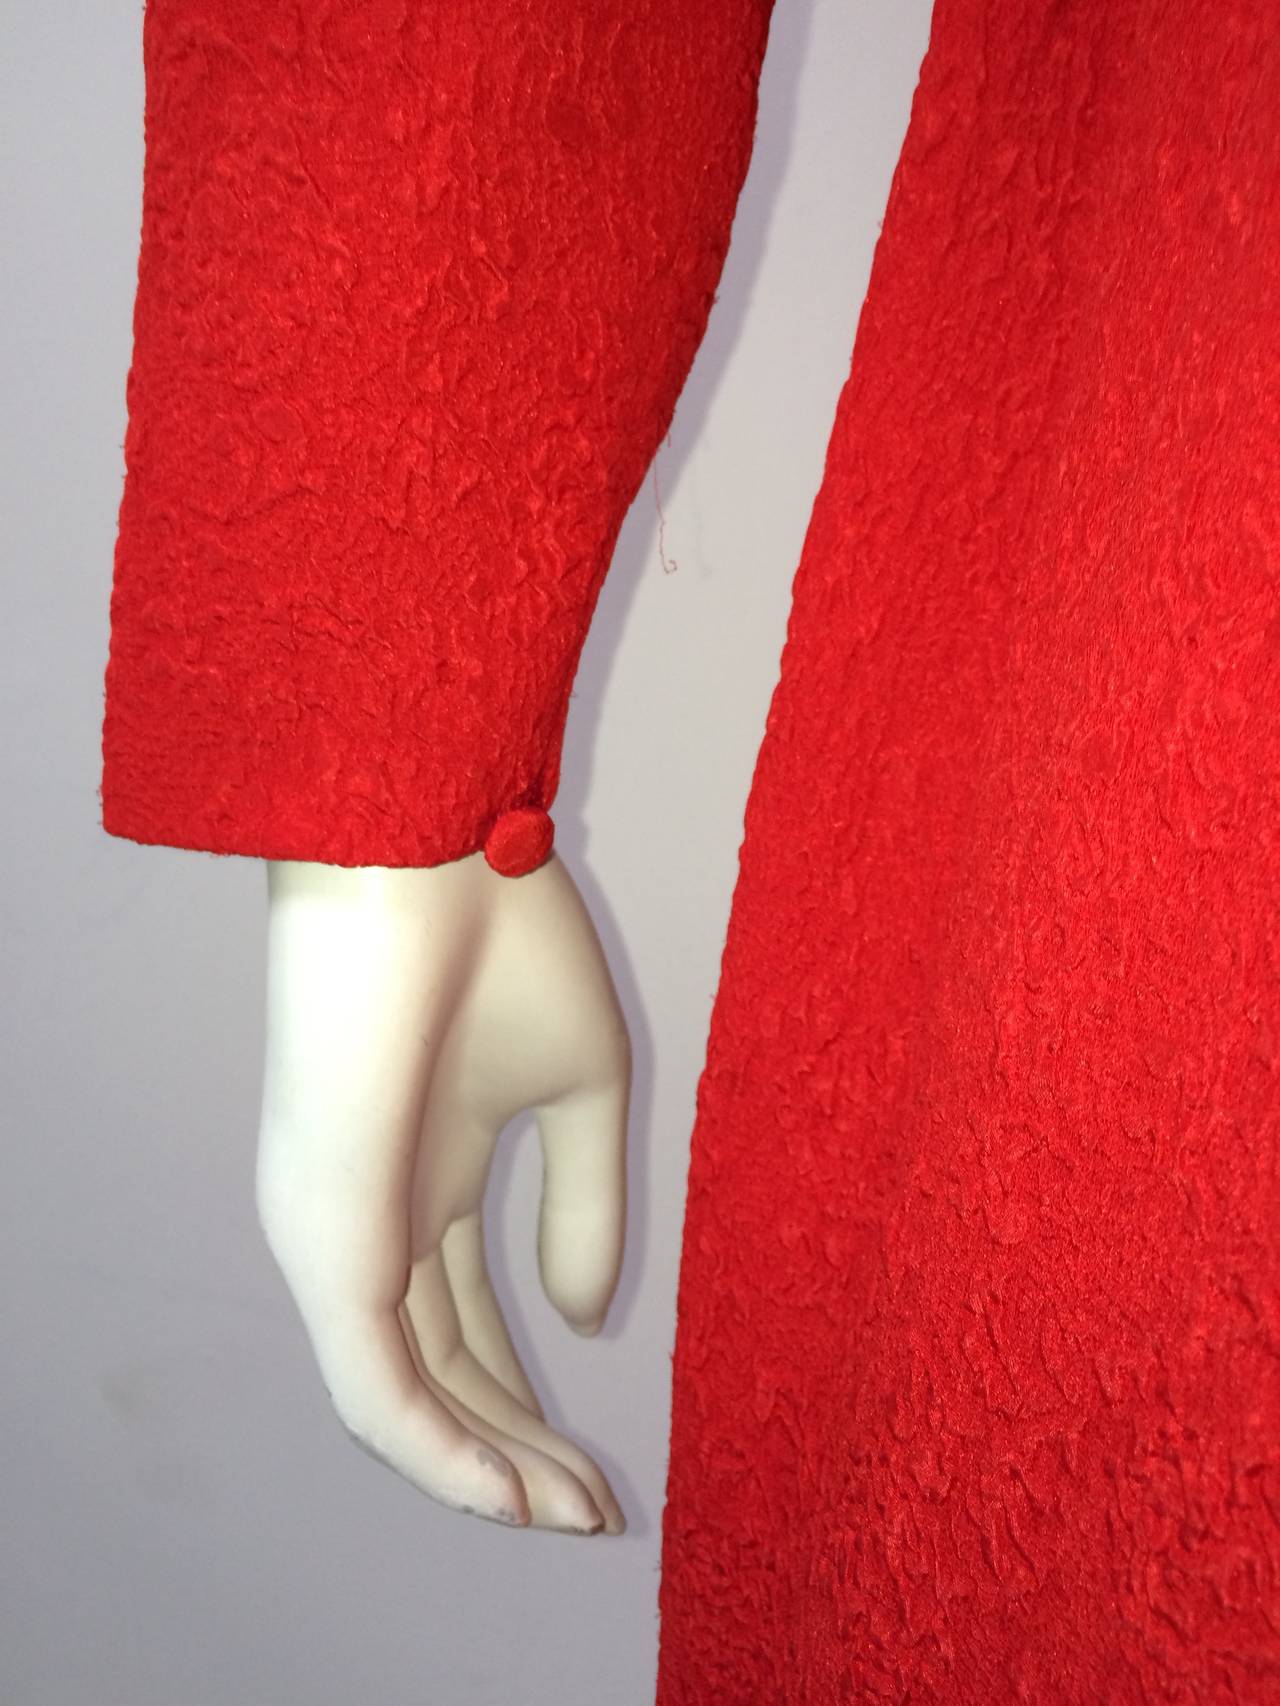 Women's SALE Carolina Herrera for Bergdorf Goodman 80s silk dress size 10/12.